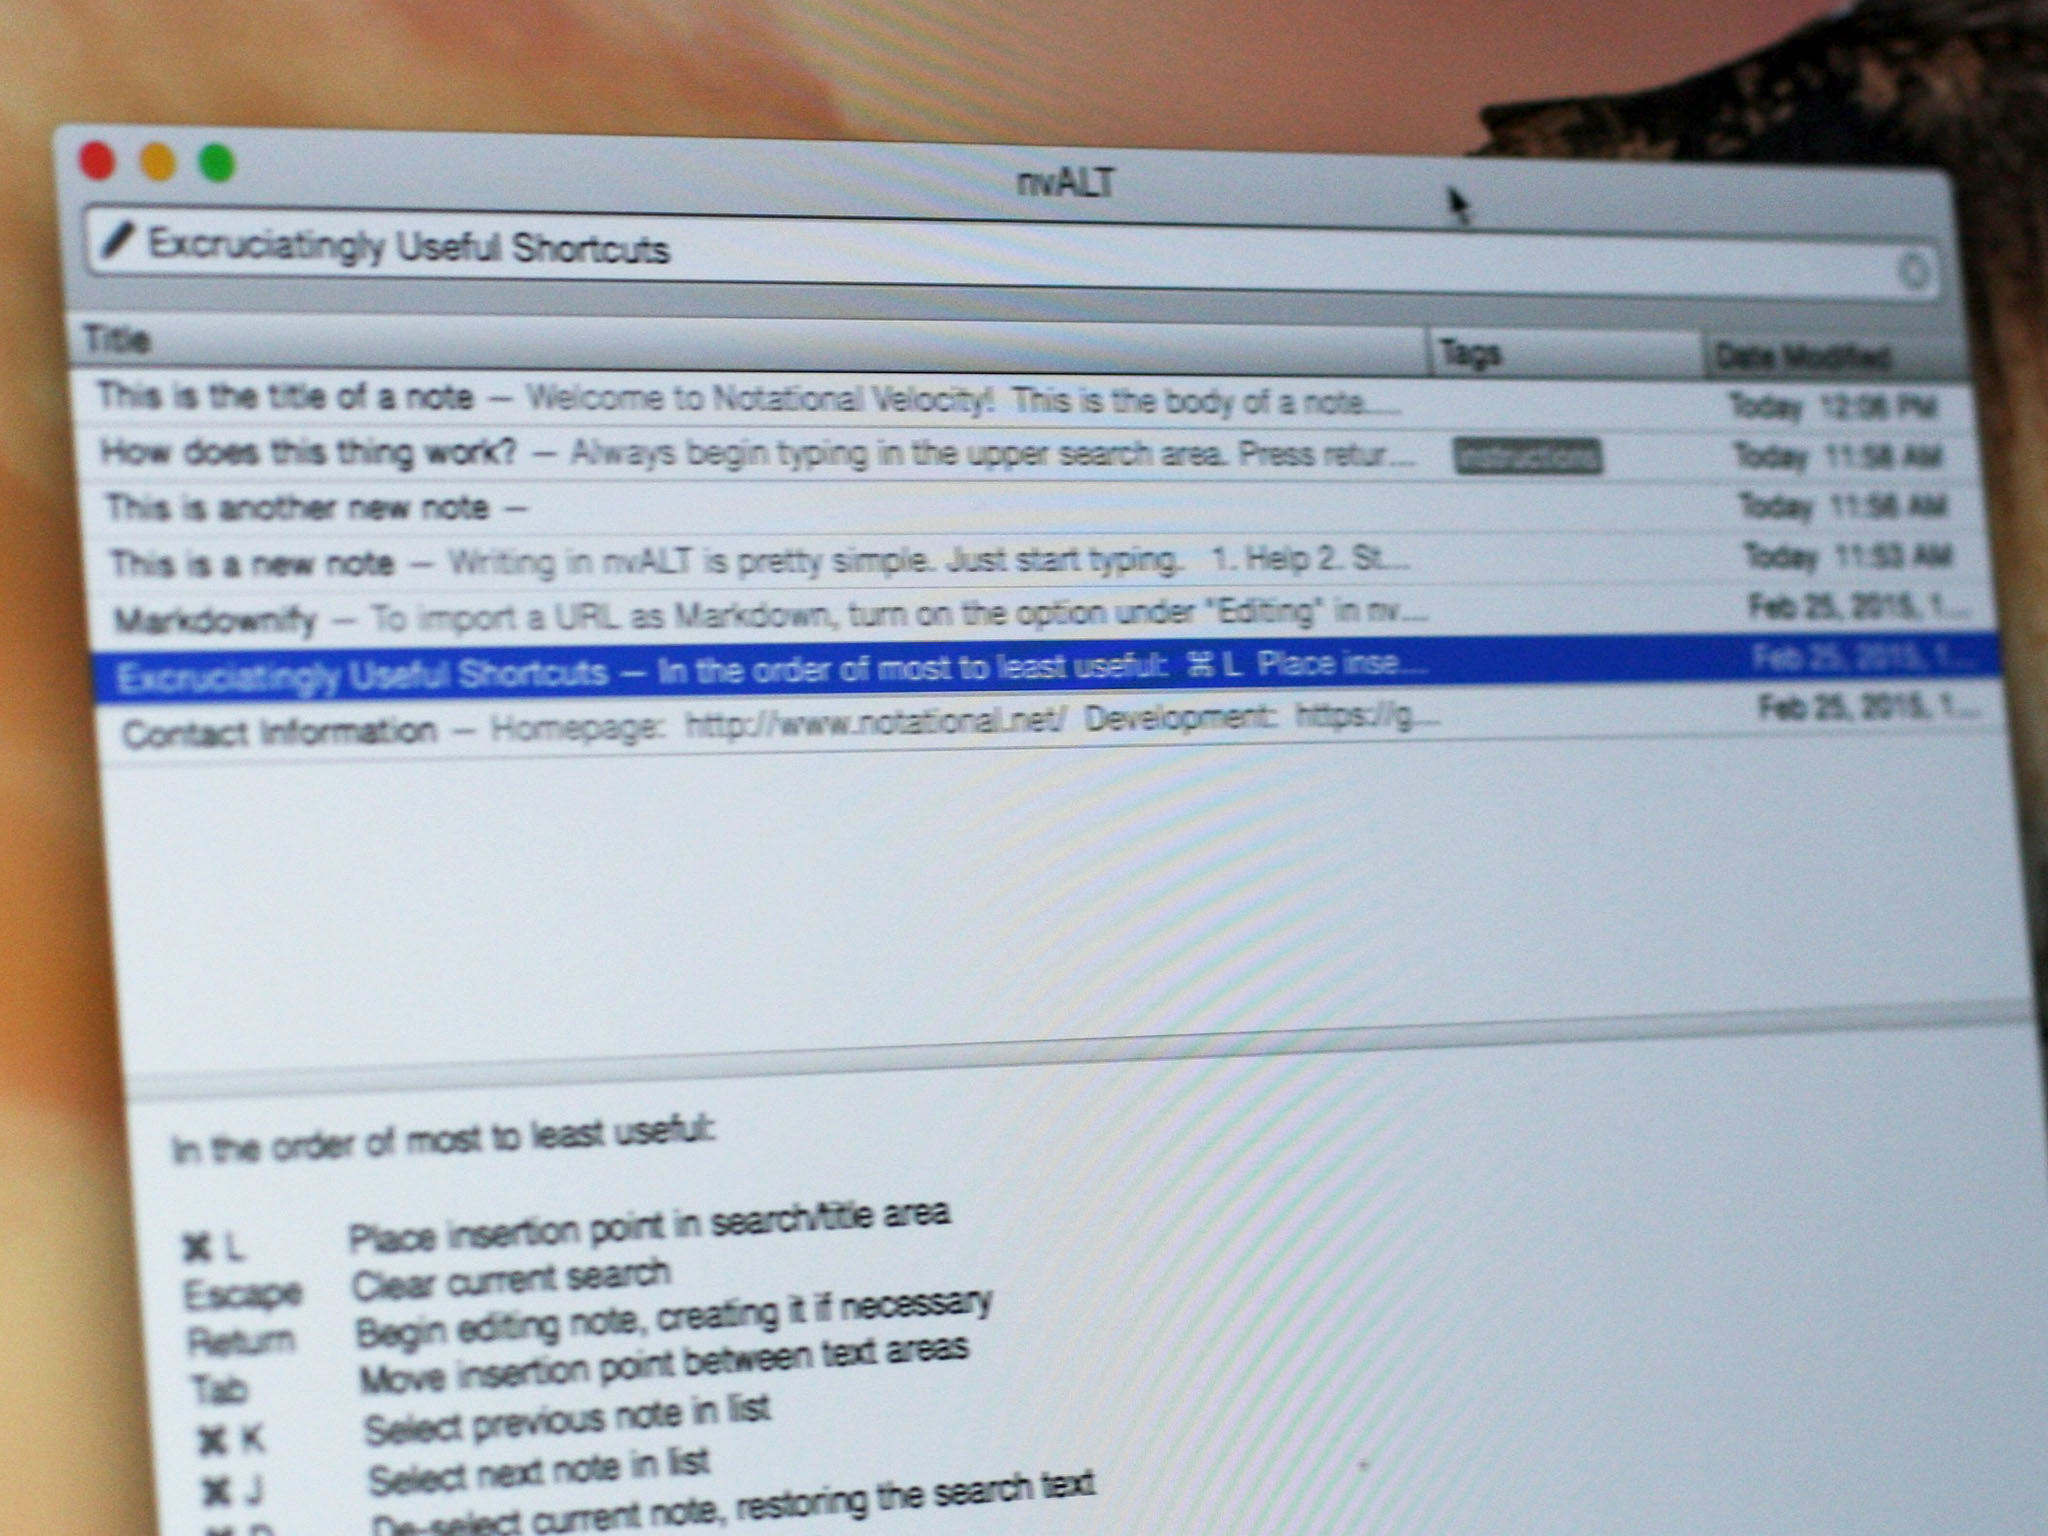 nvAlt: A Mac note taking text editor